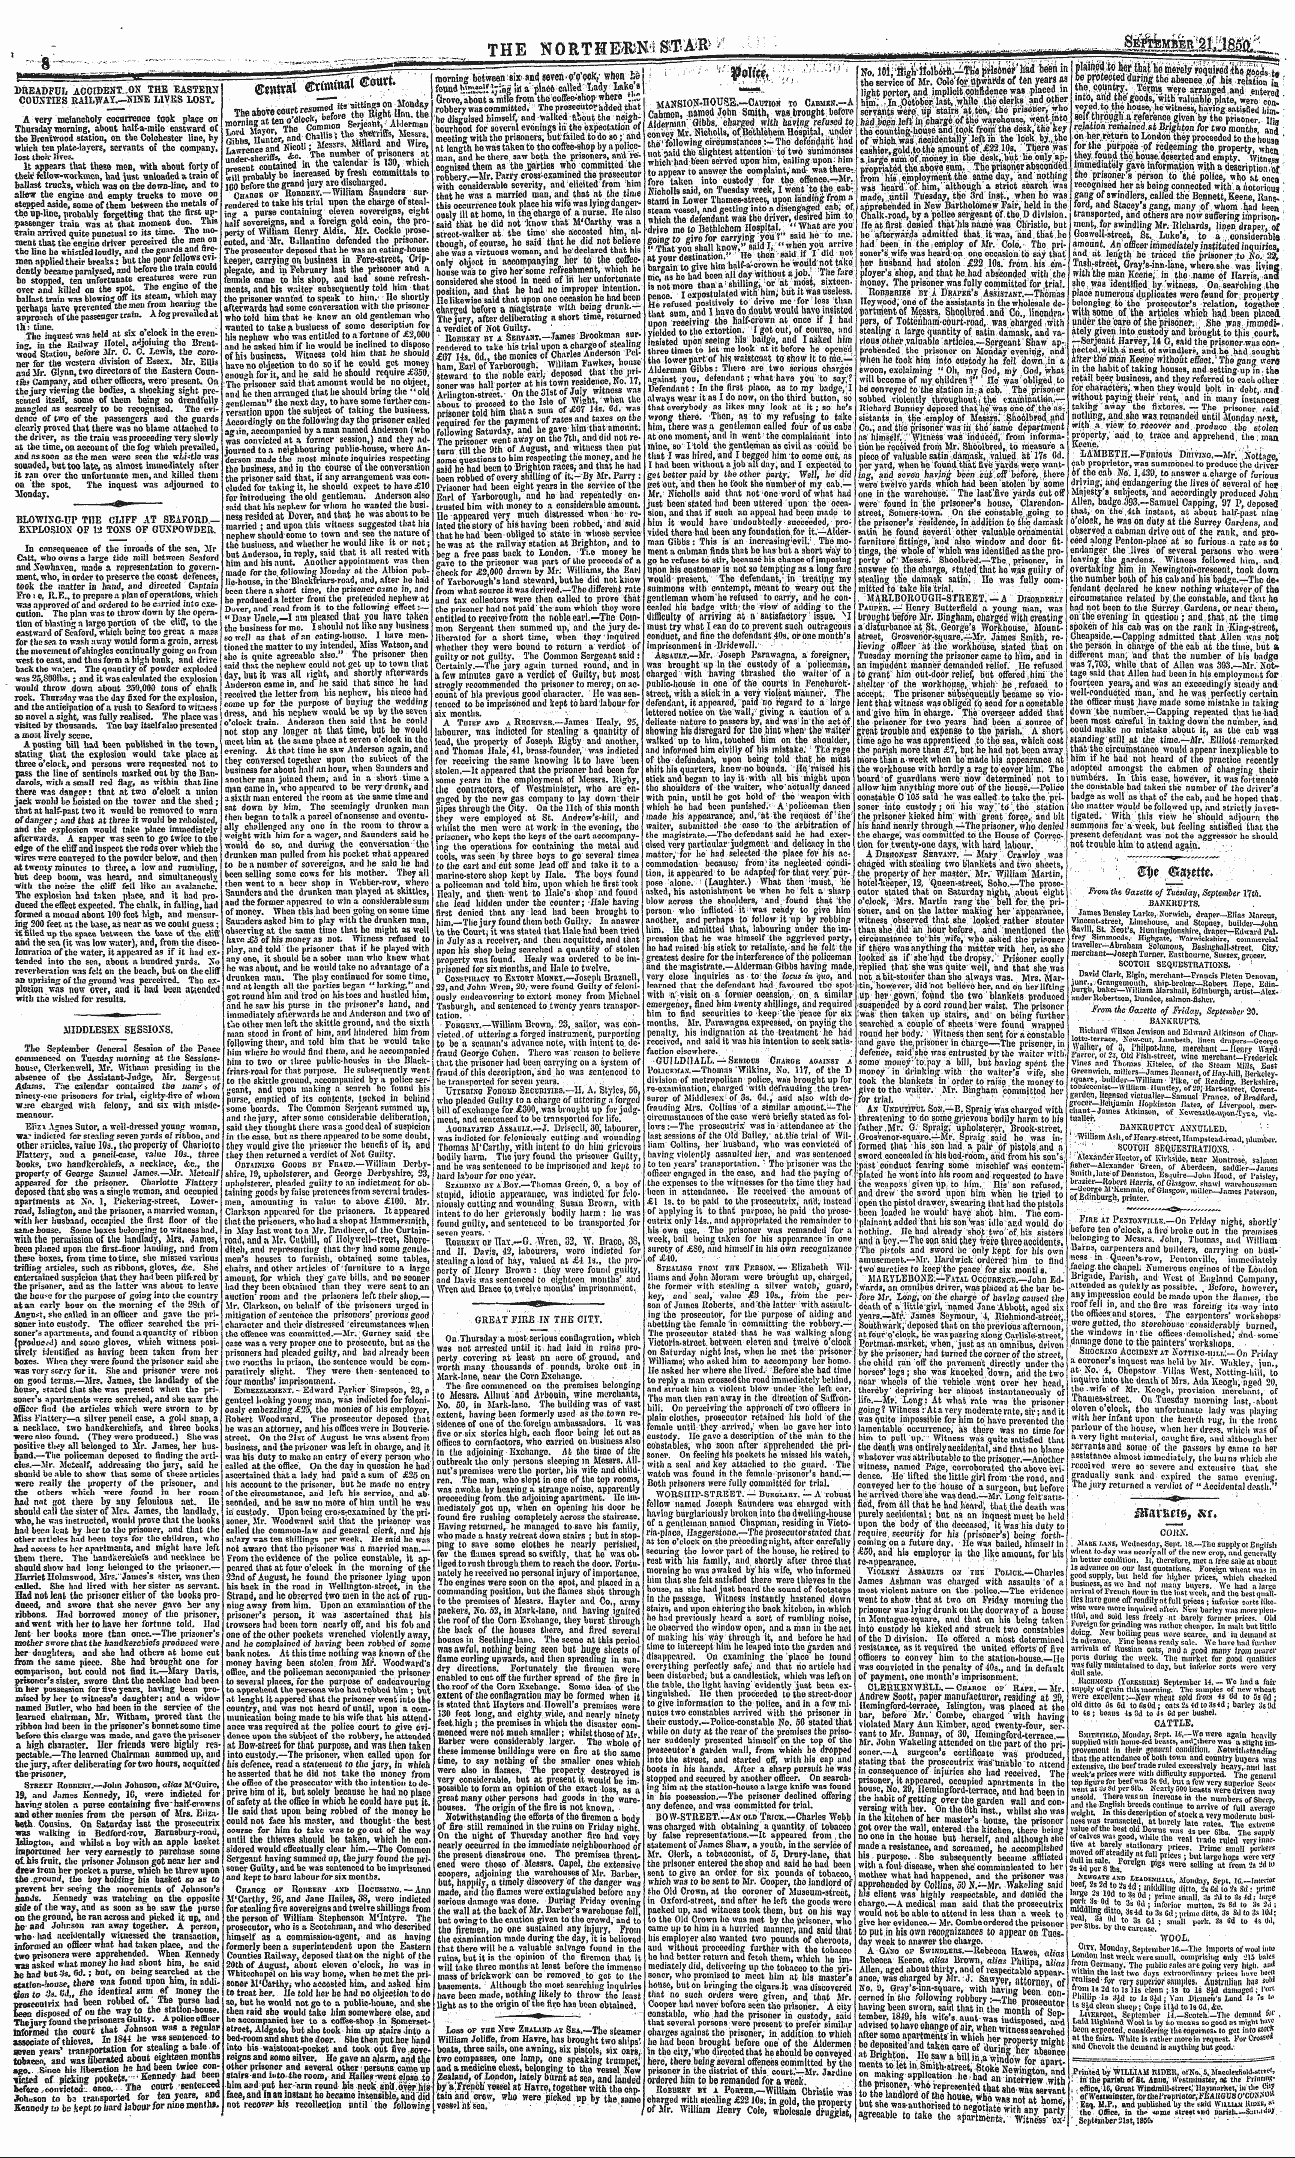 Northern Star (1837-1852): jS F Y, 3rd edition - Noloi^Hi Tliolljdvh.-^'Rha Prisoner ' Ha...